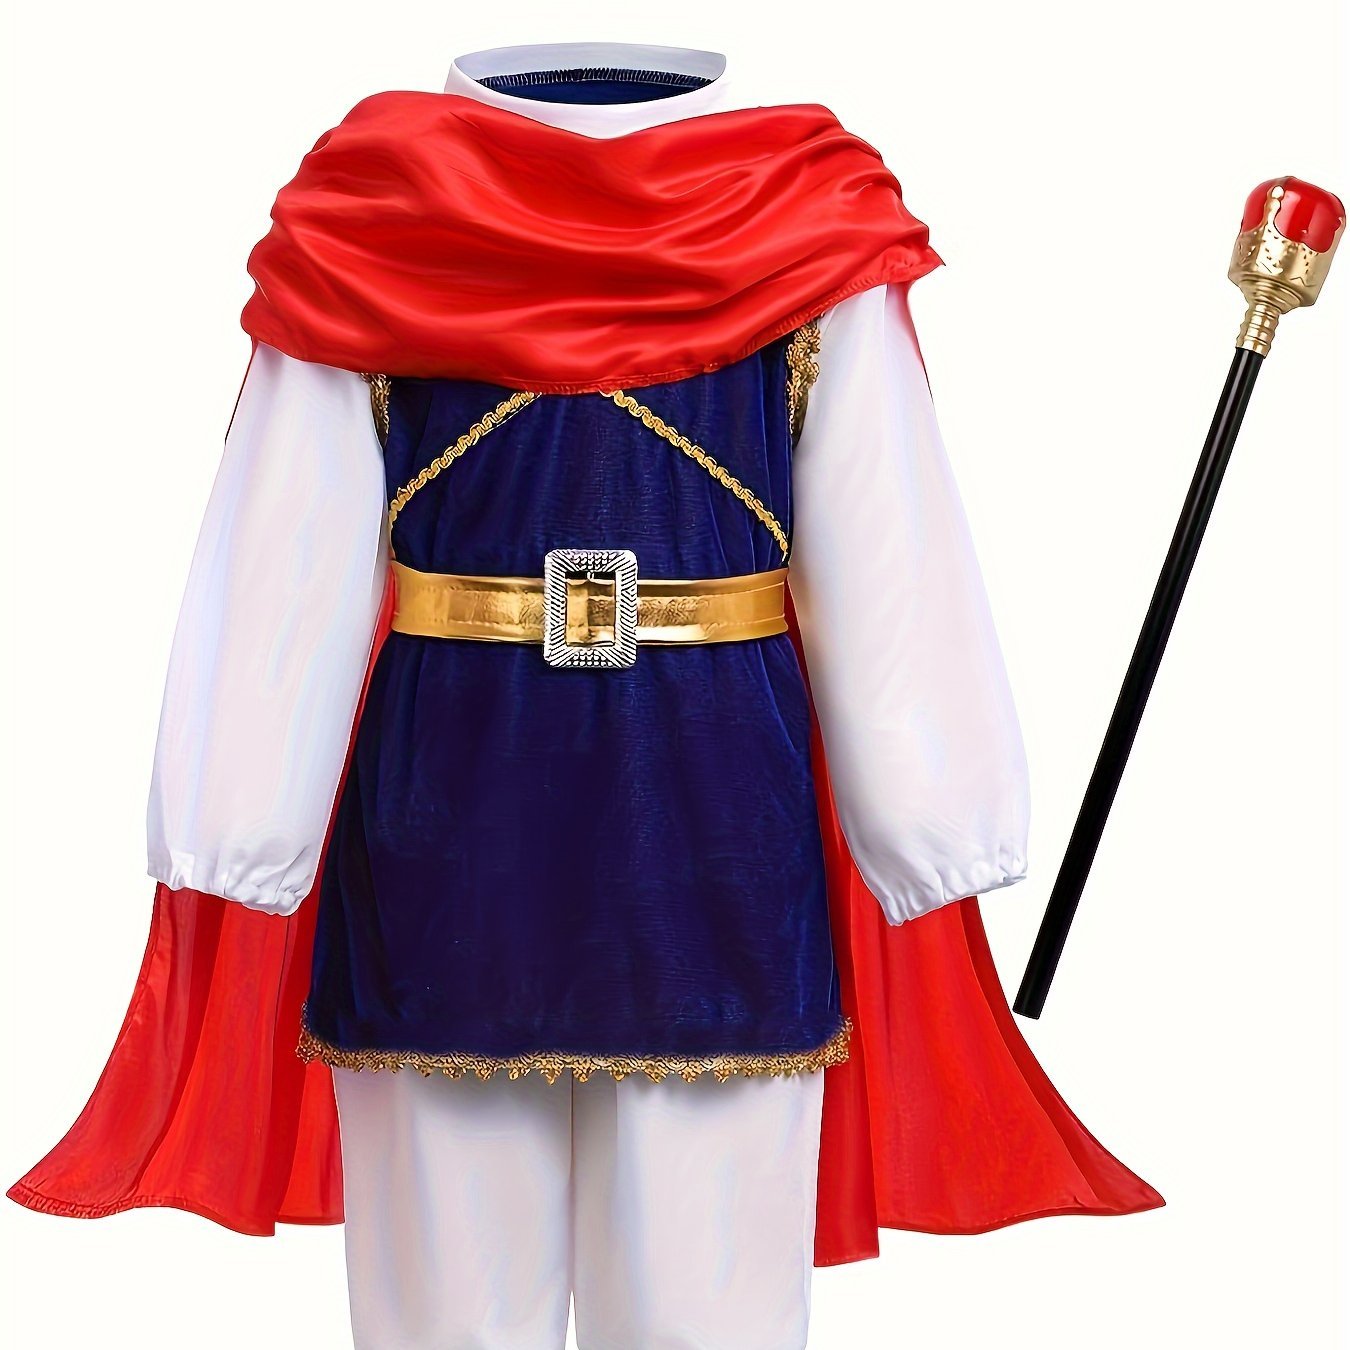 

7pcs Boy's Royal , Prince's Top & Pants & Cloak & Scepter & Crown & Belt & Shoe Covers Set, Boys Outfit For Halloween Party